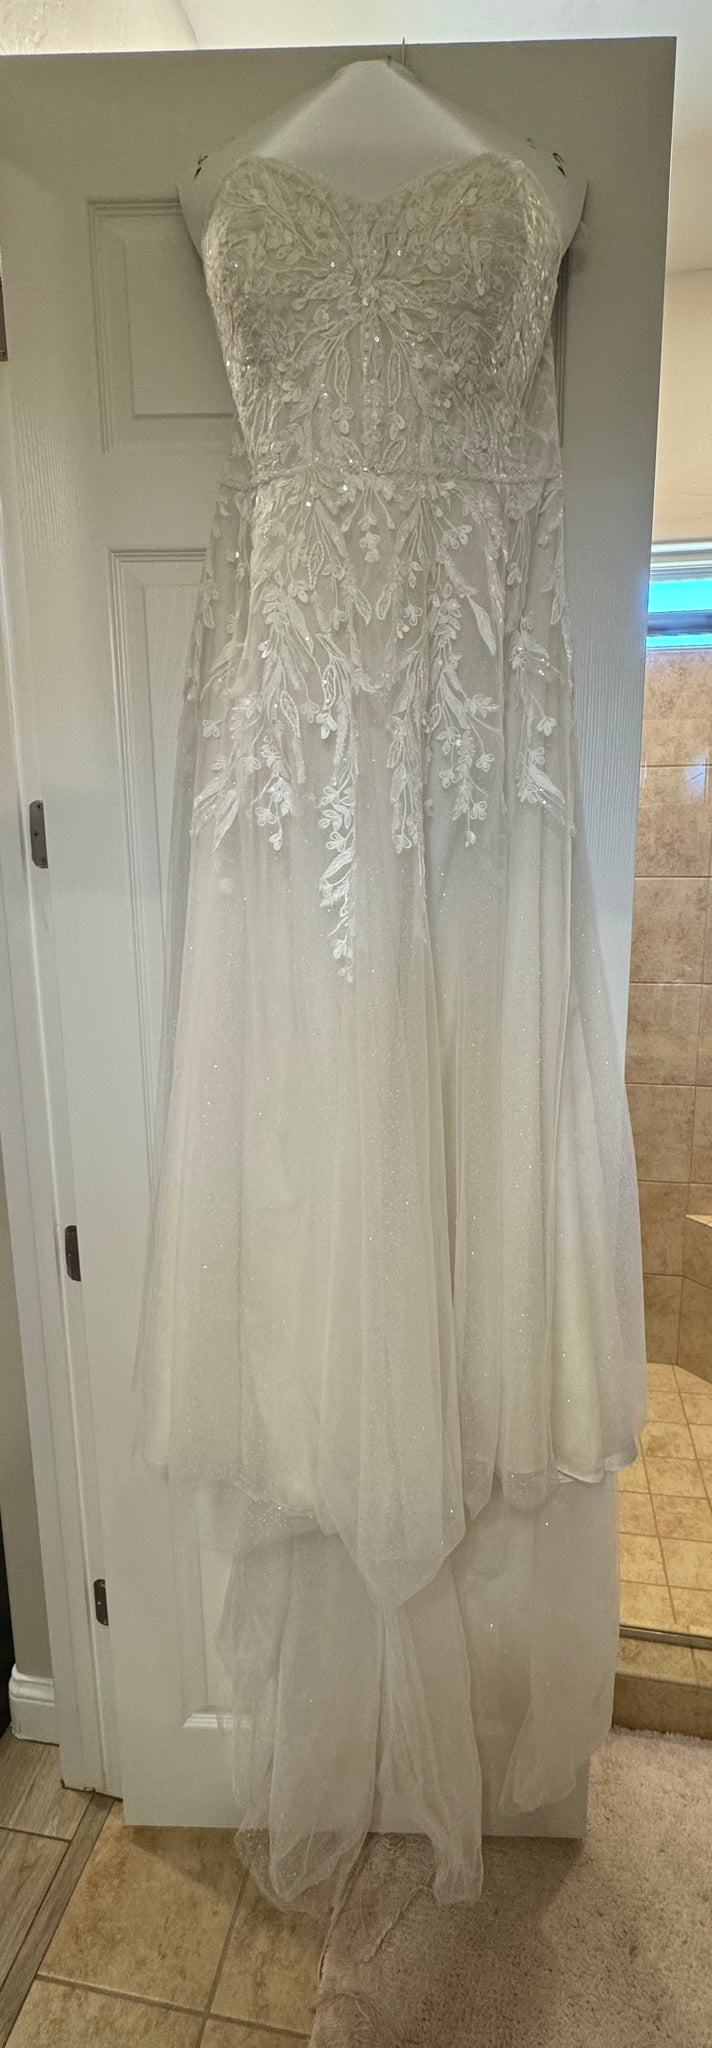 Melissa Sweet '8MS251251IVYOYSTER' wedding dress size-18 NEW